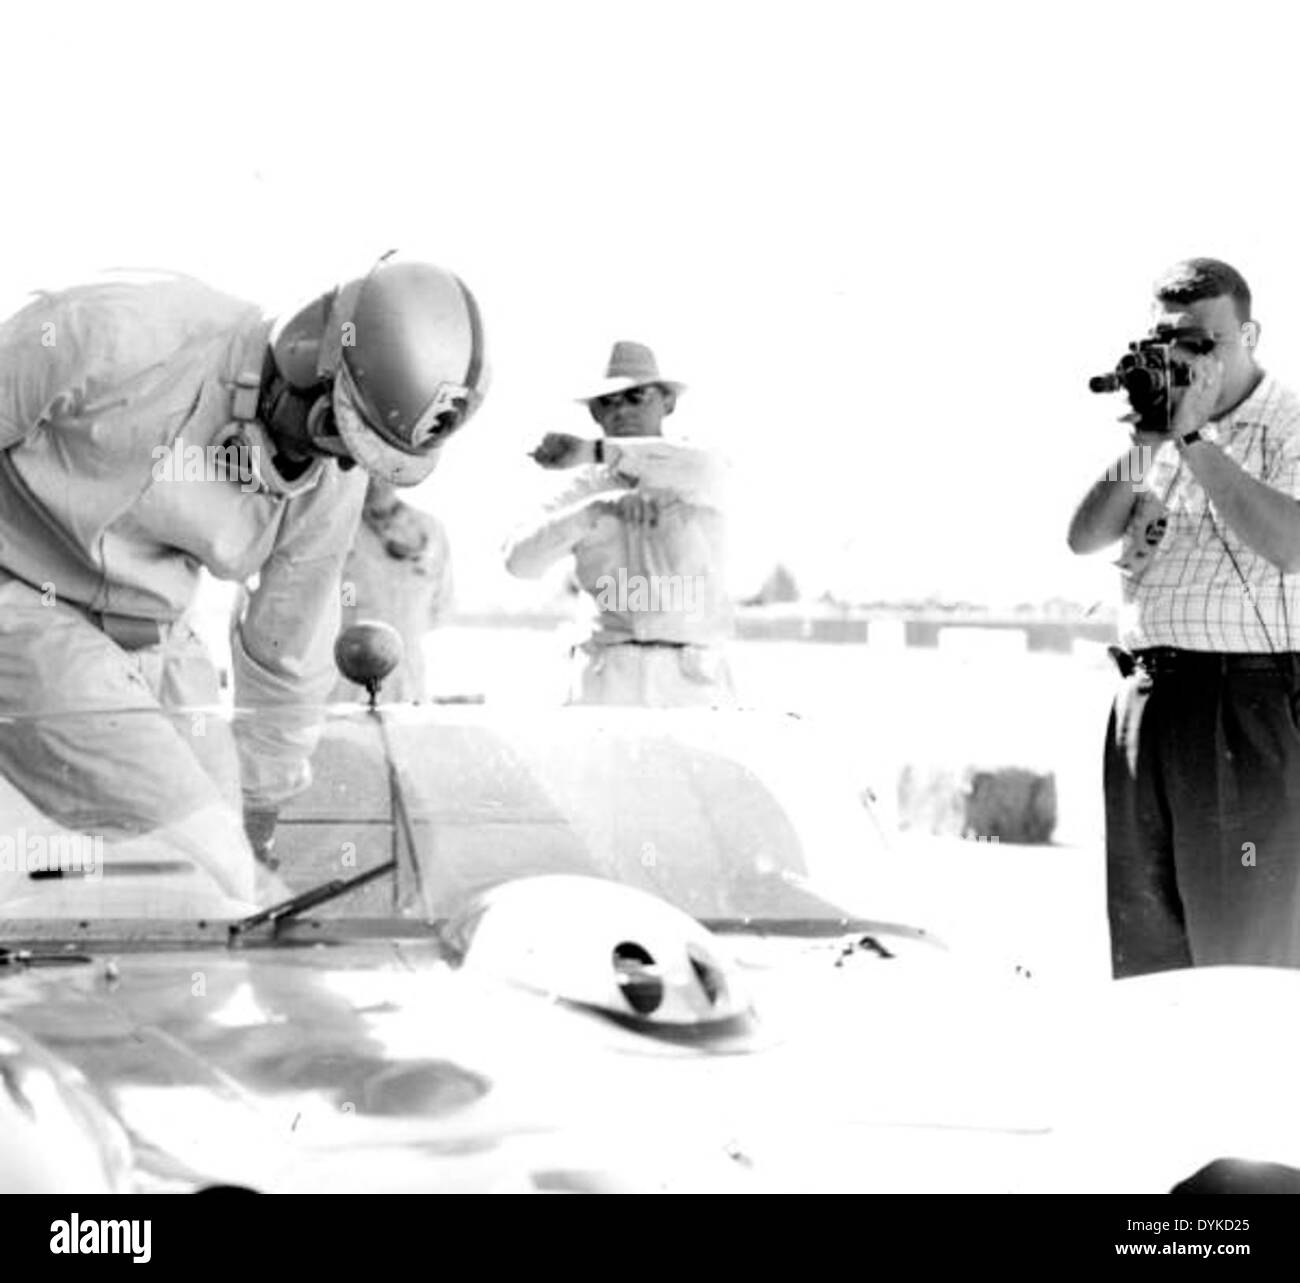 Driver and car at the Grand Prix race - Sebring, Florida Stock Photo